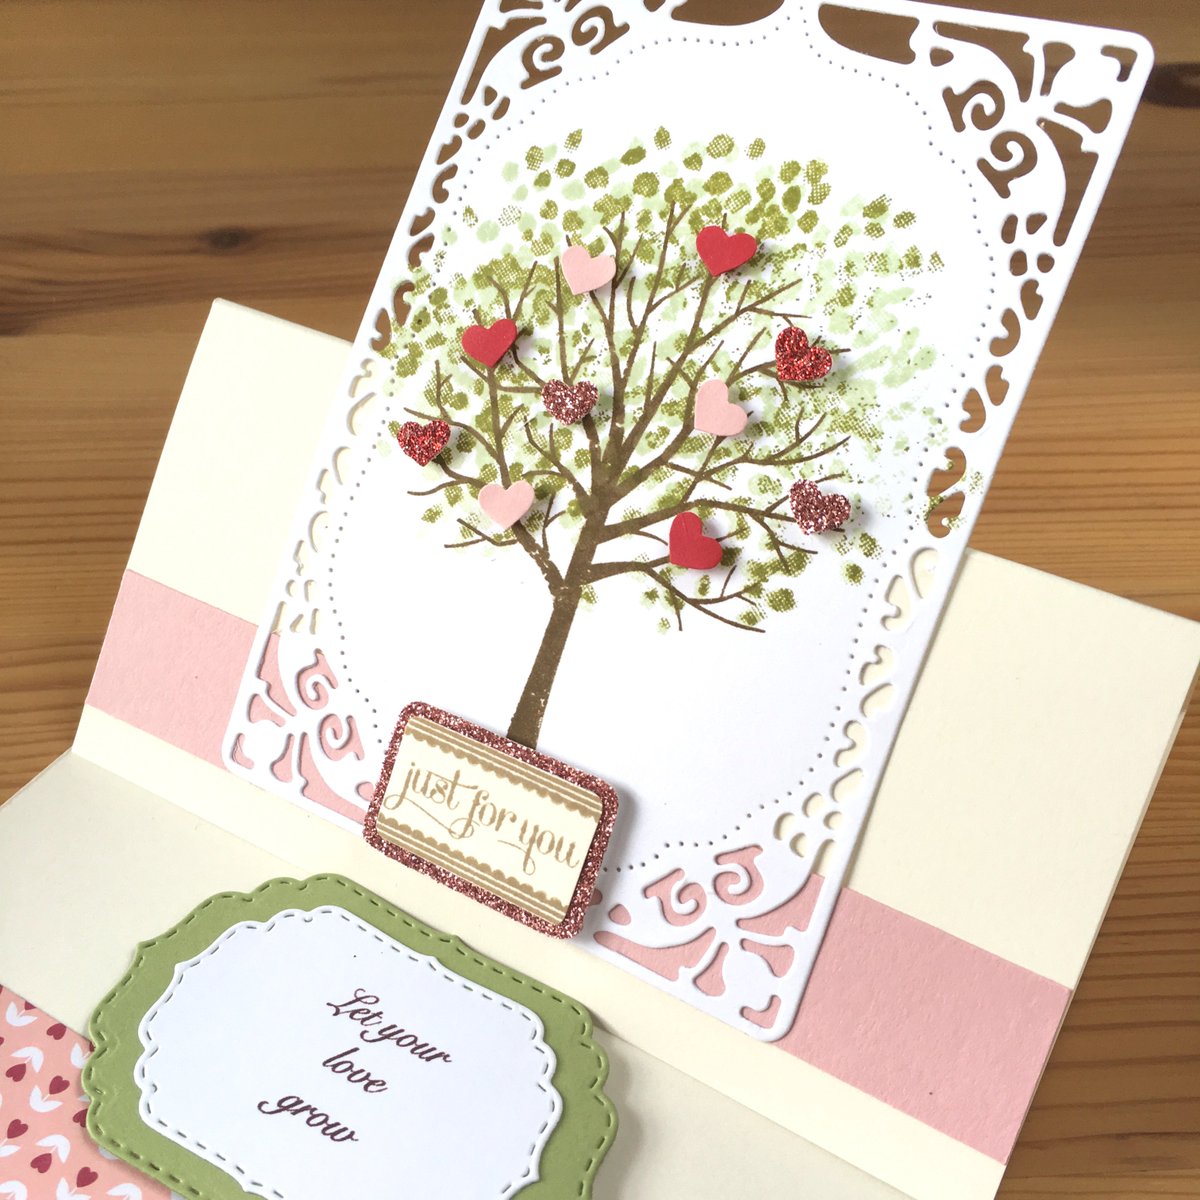 Atelier Clia Sur Twitter ハンドメイドサイトminneで ハートツリーのメッセージカード 販売中です 立てて飾れるオシャレかわいいカード いろいろ多目的に使えます オシャレなカード 誕生日カード 記念日 結婚記念日 結婚祝い 出産祝い ハートのカード